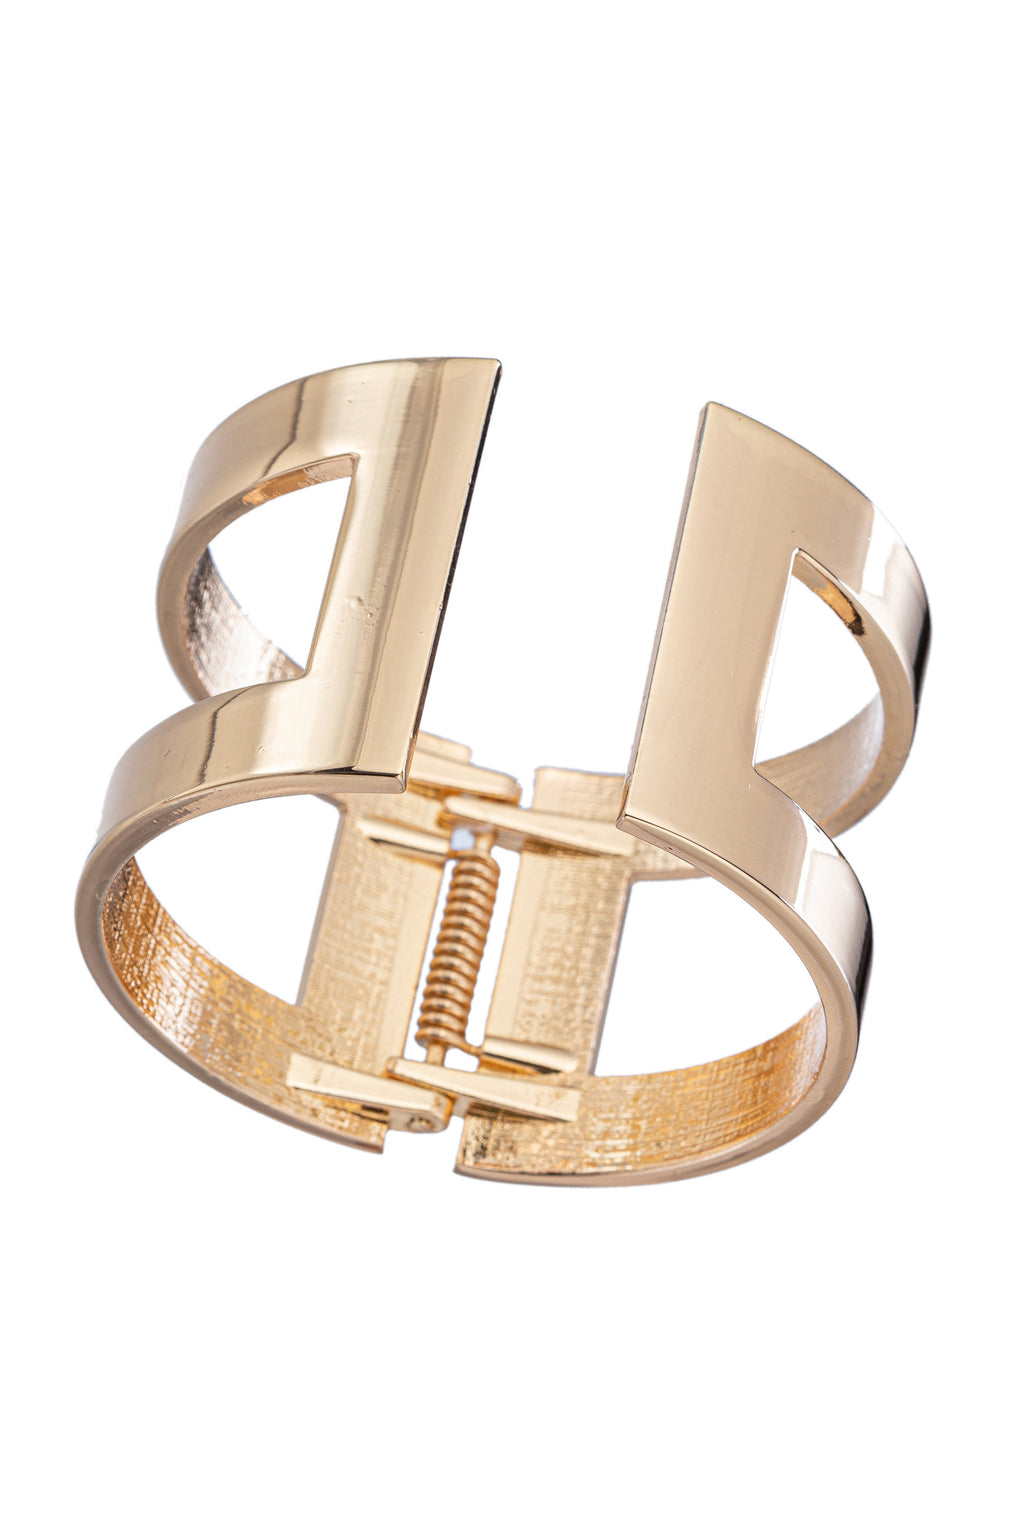 Gold titanium latch bracelet.